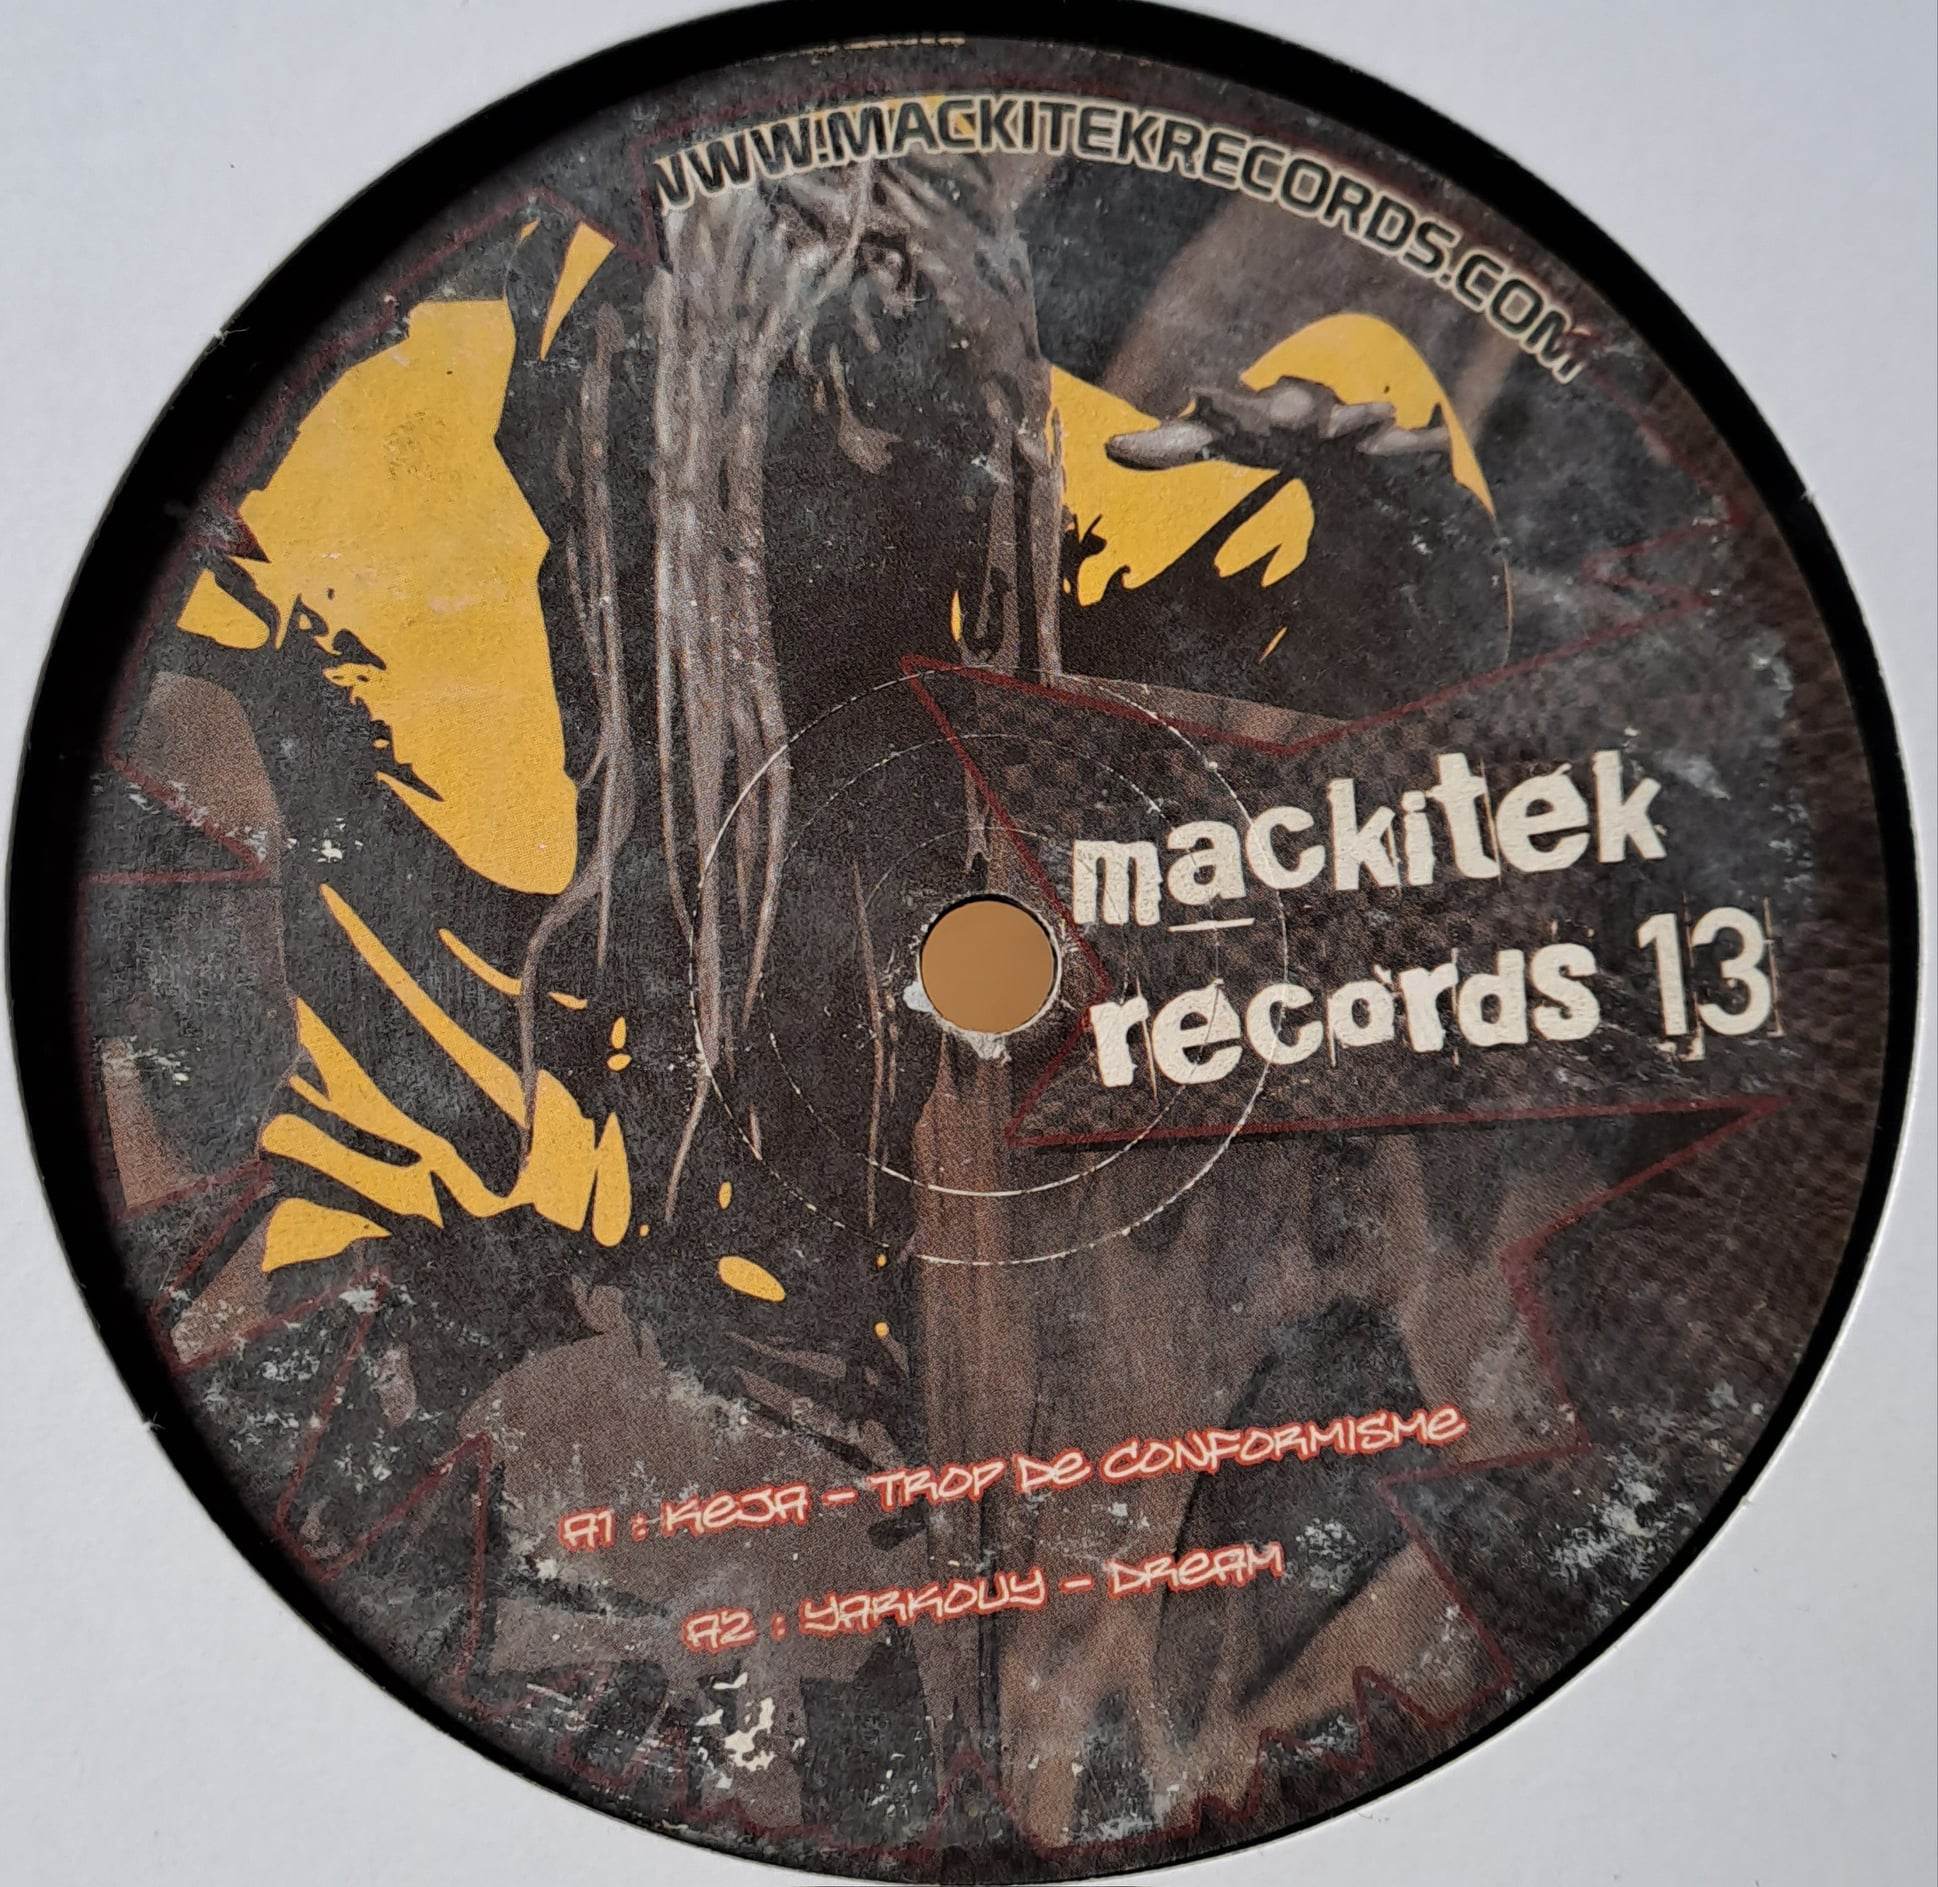 Mackitek 13 - vinyle tribecore